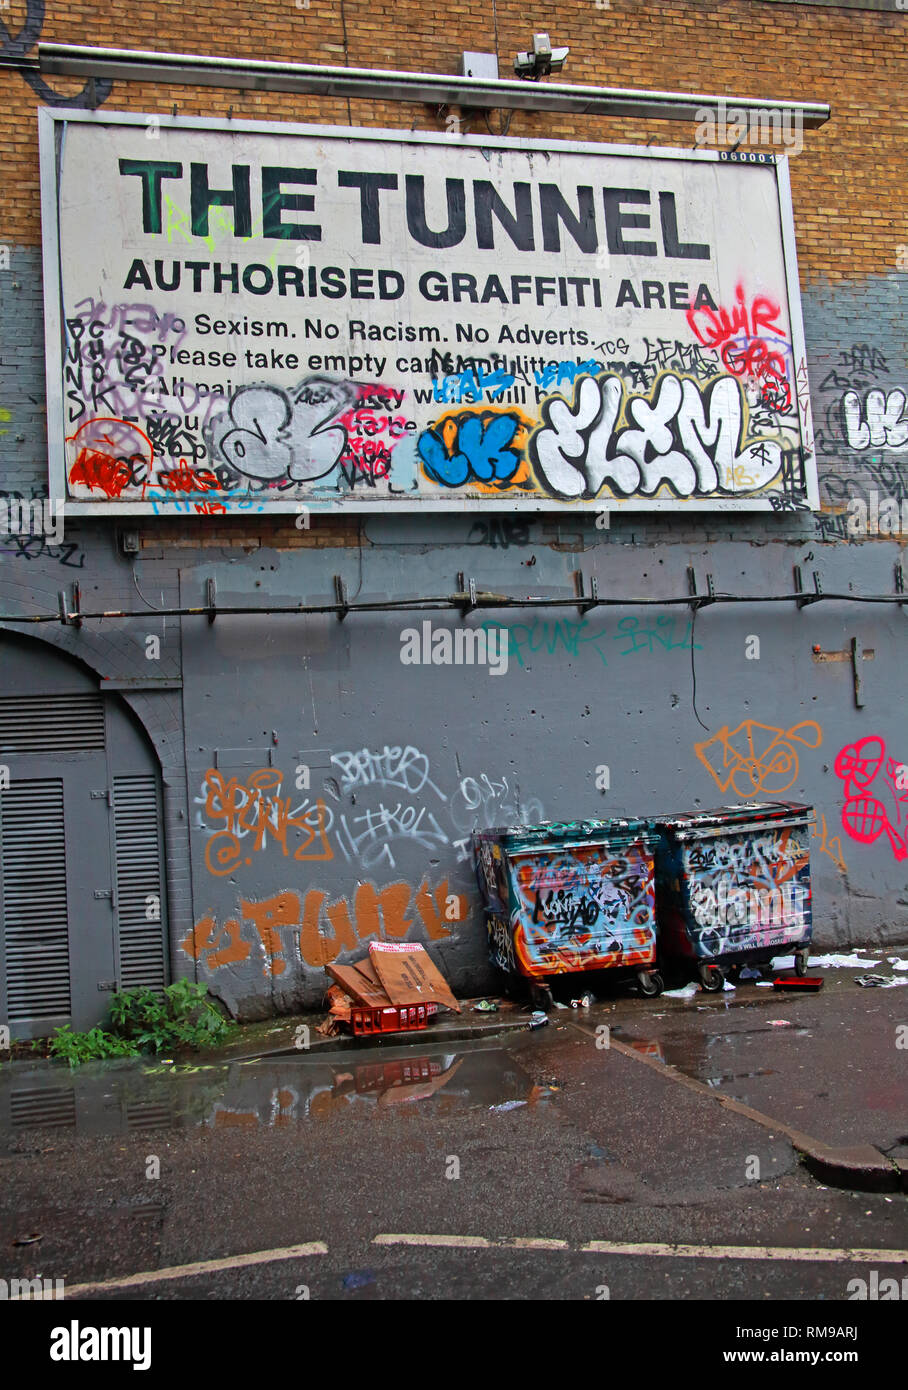 Il Tunnel, autorizzato area Graffiti, Leake Street, Waterloo, Lambeth, Londra, Inghilterra sud-orientale, UK, SE1 7NN Foto Stock